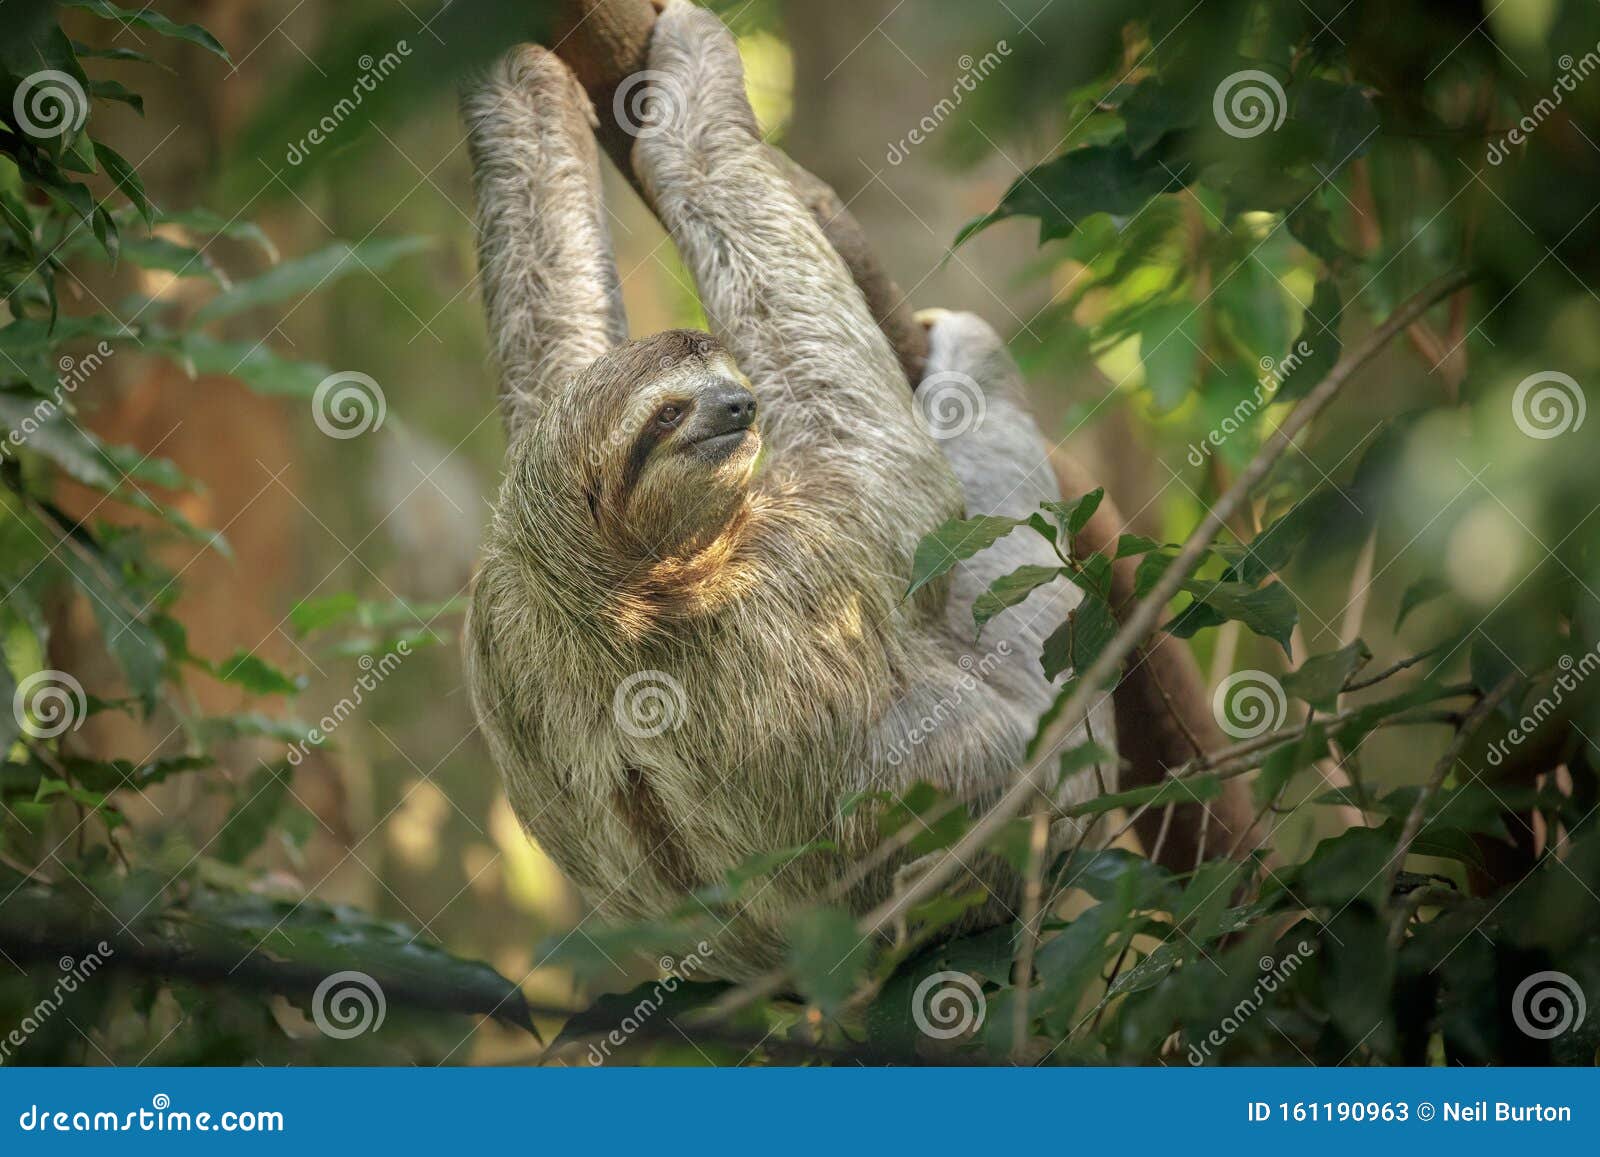 three-toed sloth in costa rica